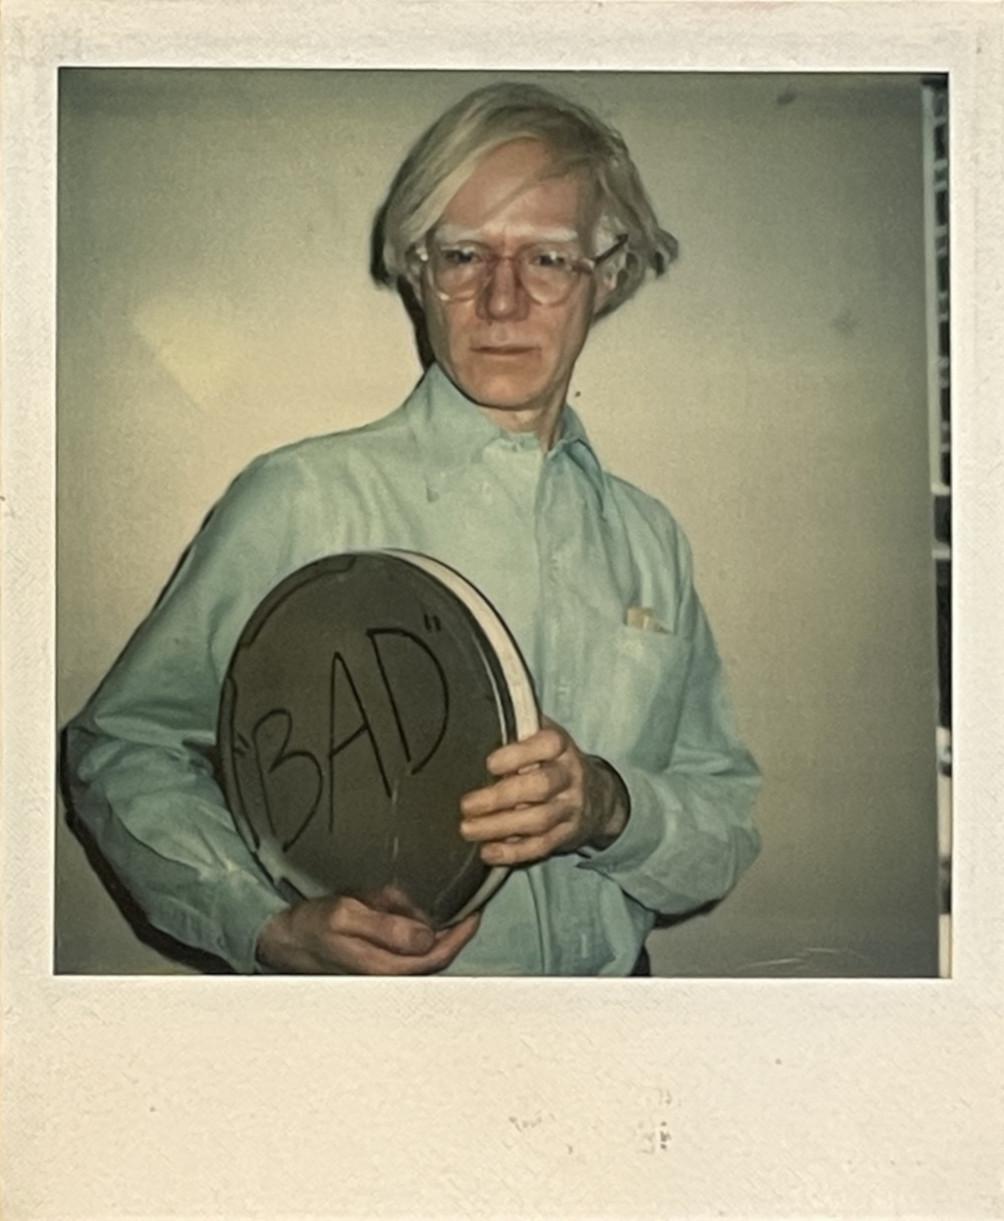 Andy Warhol - Filmmaker, Artist, Publisher, Philosopher - Photograph by Christopher Makos